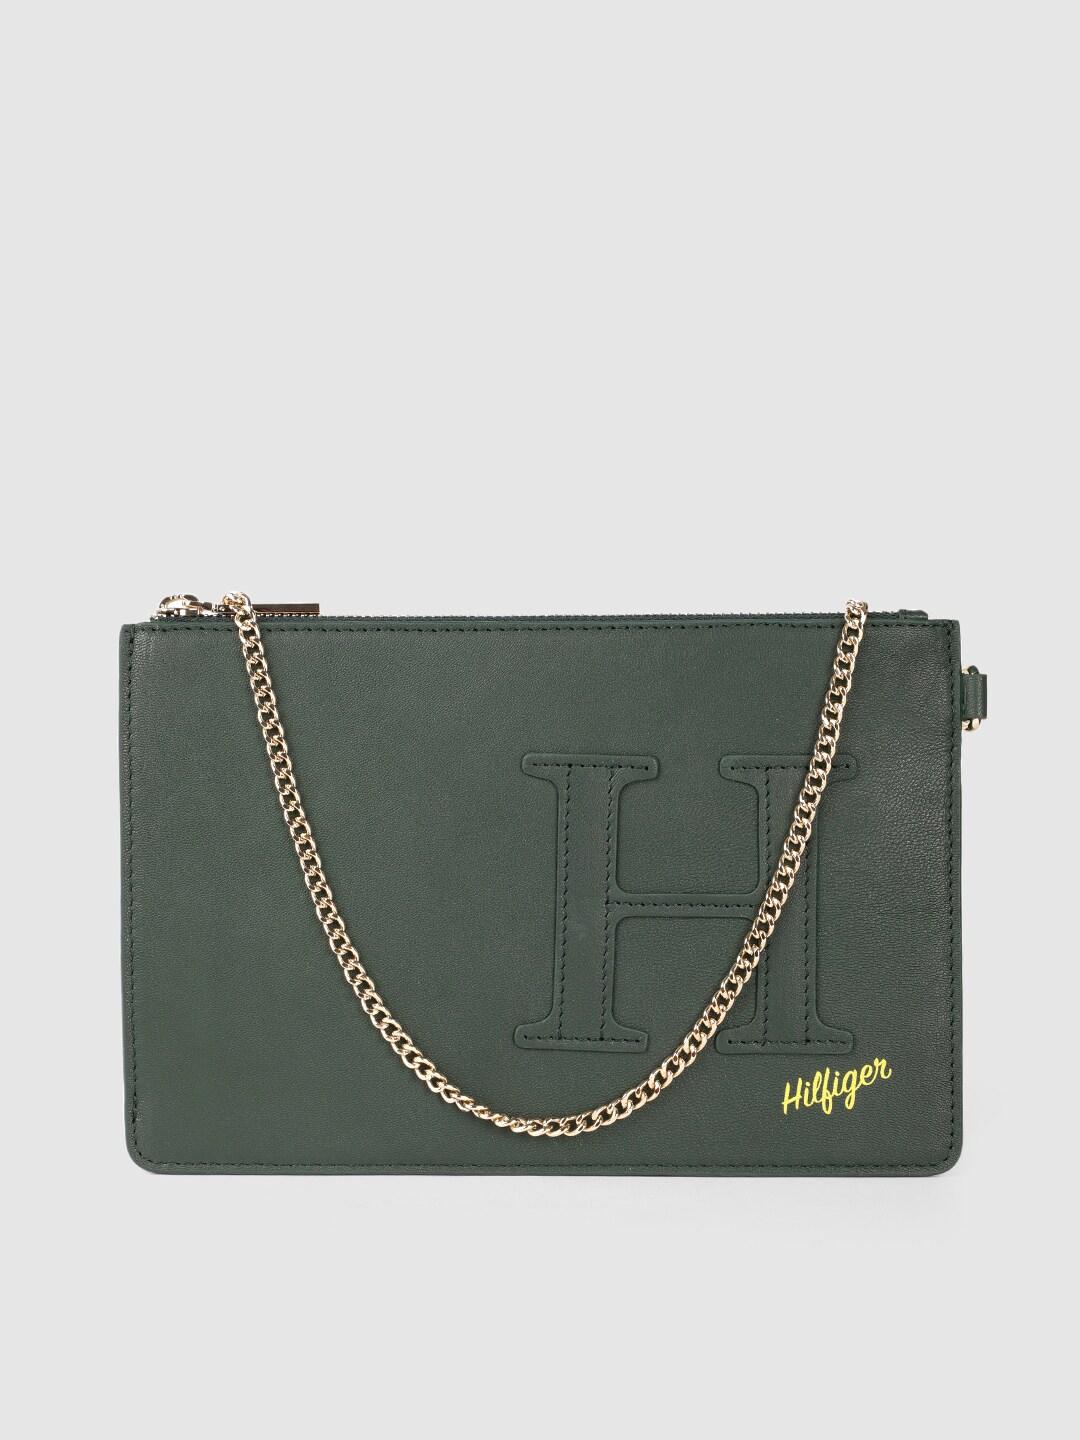 Tommy Hilfiger Olive Green Leather Structured Sling Bag with Brand Logo Applique Detail